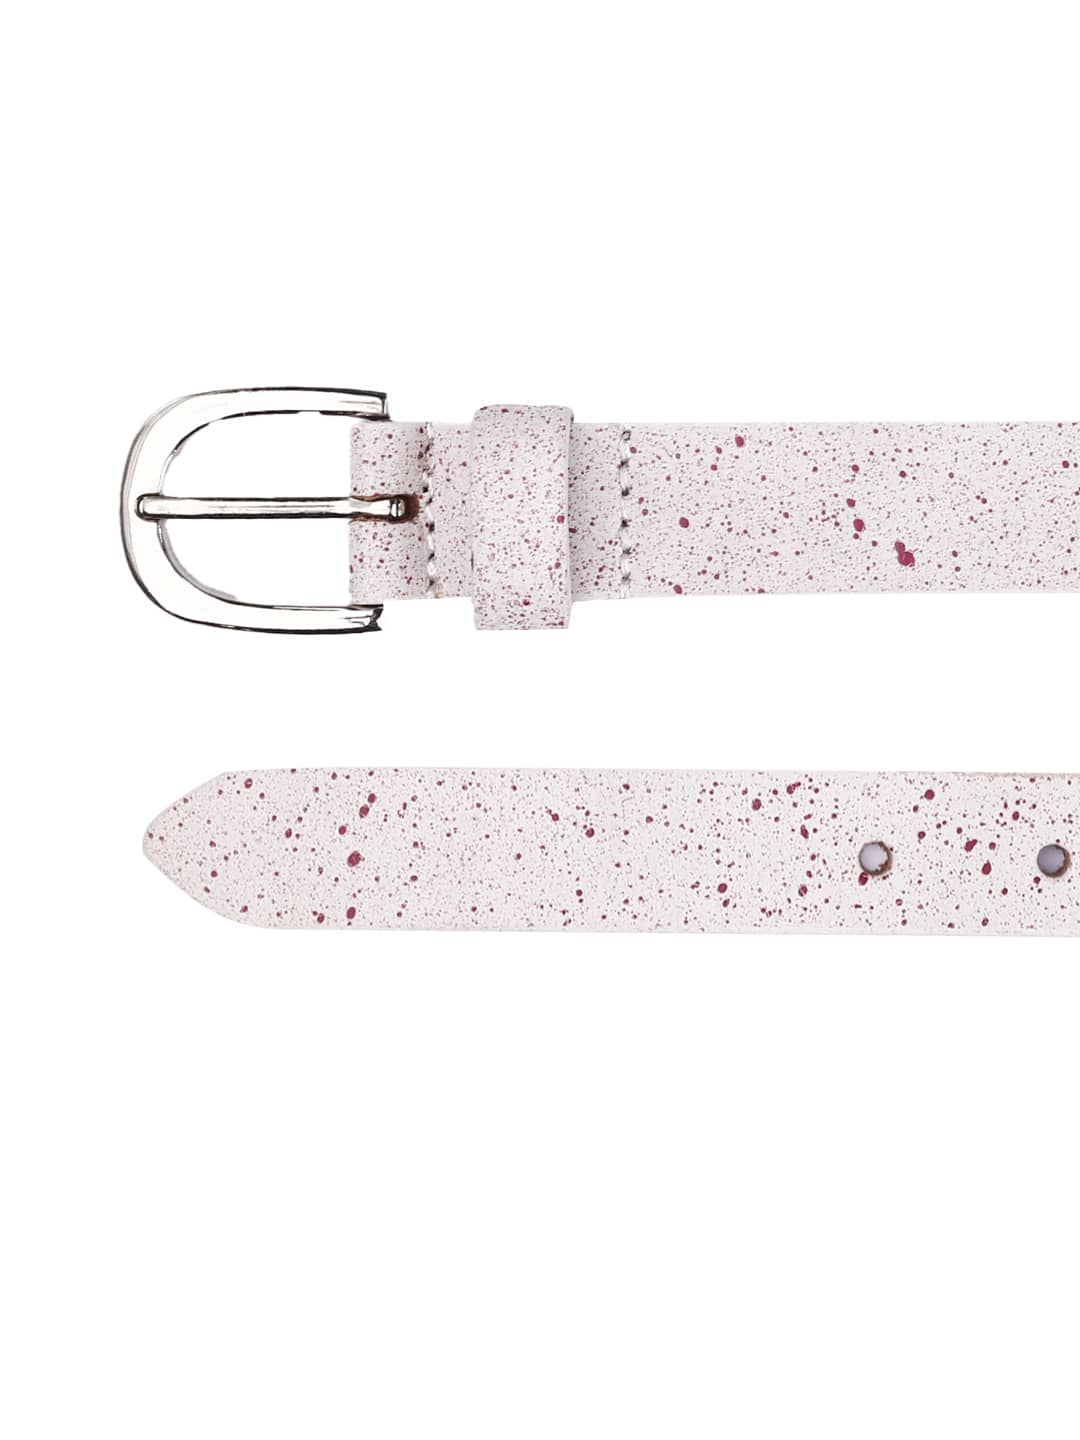 Bacca Bucci 'Stardust Splatter' Women's Belt - 22mm Handcrafted Vegan Leather with Artisanal Speckle Design